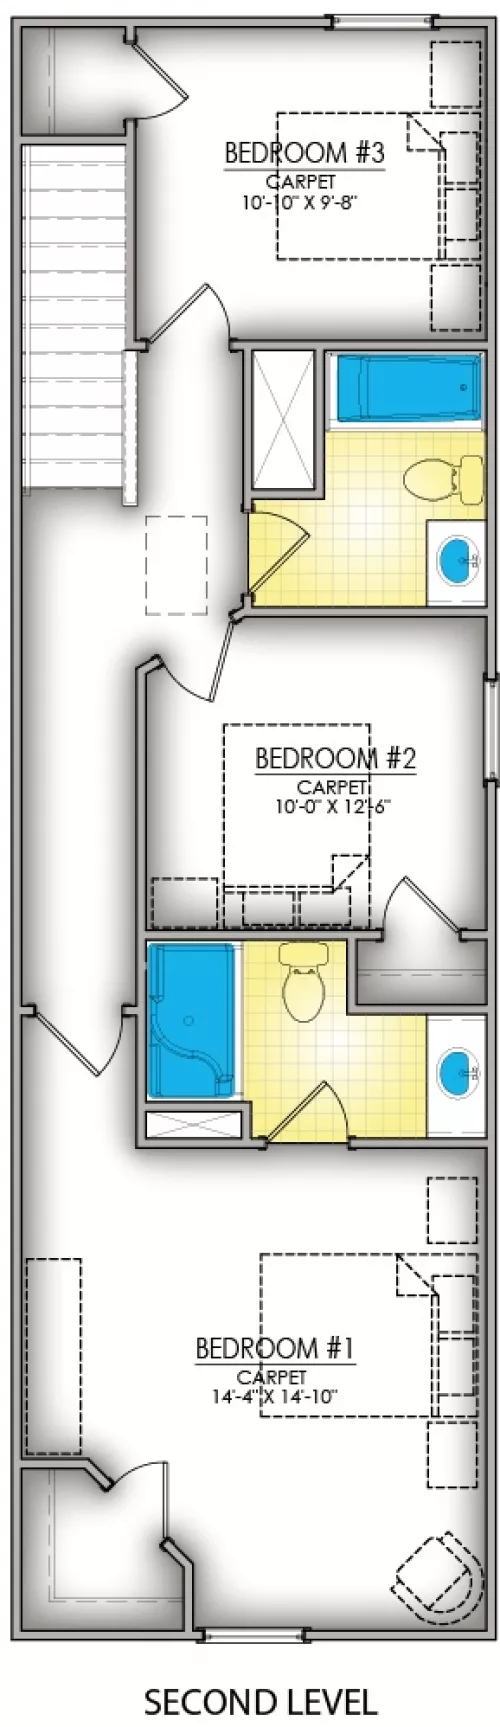 Daytona Second Level Floorplan